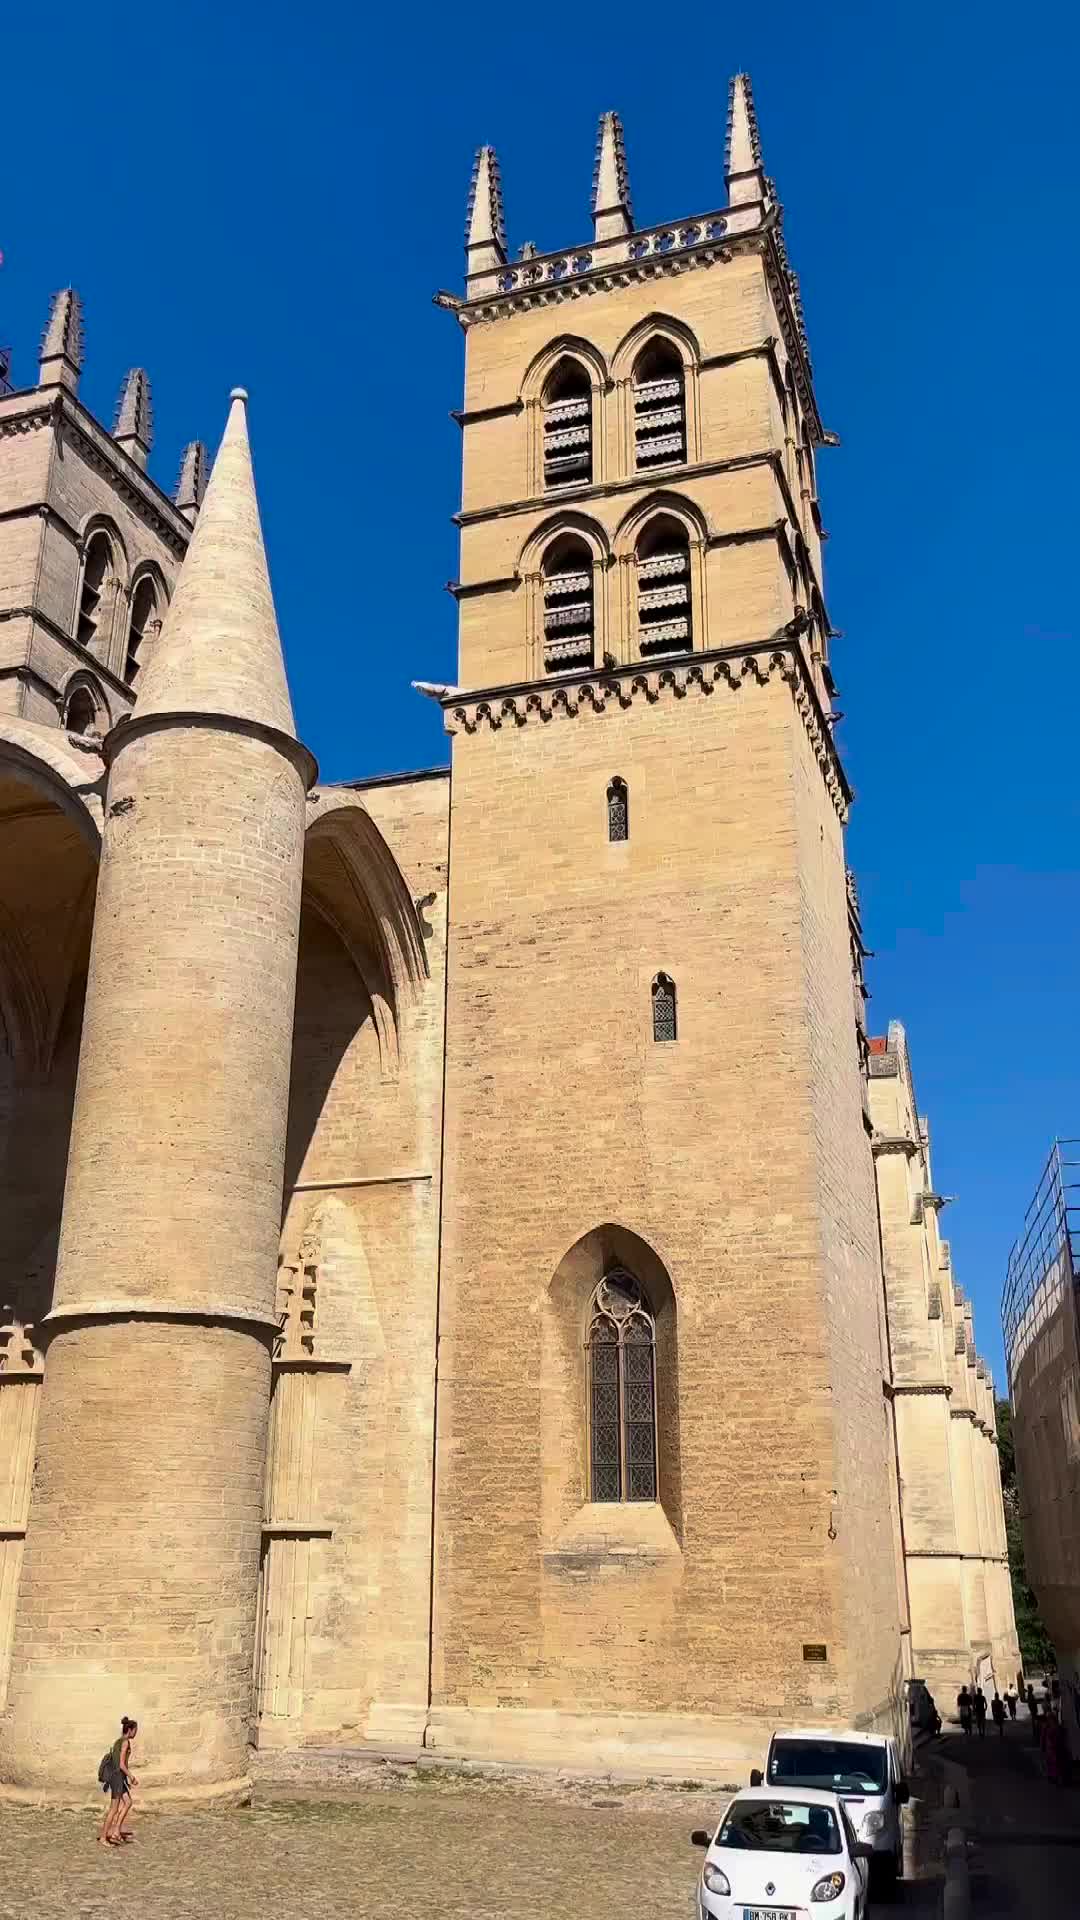 Discover Cathédrale Saint-Pierre in Montpellier